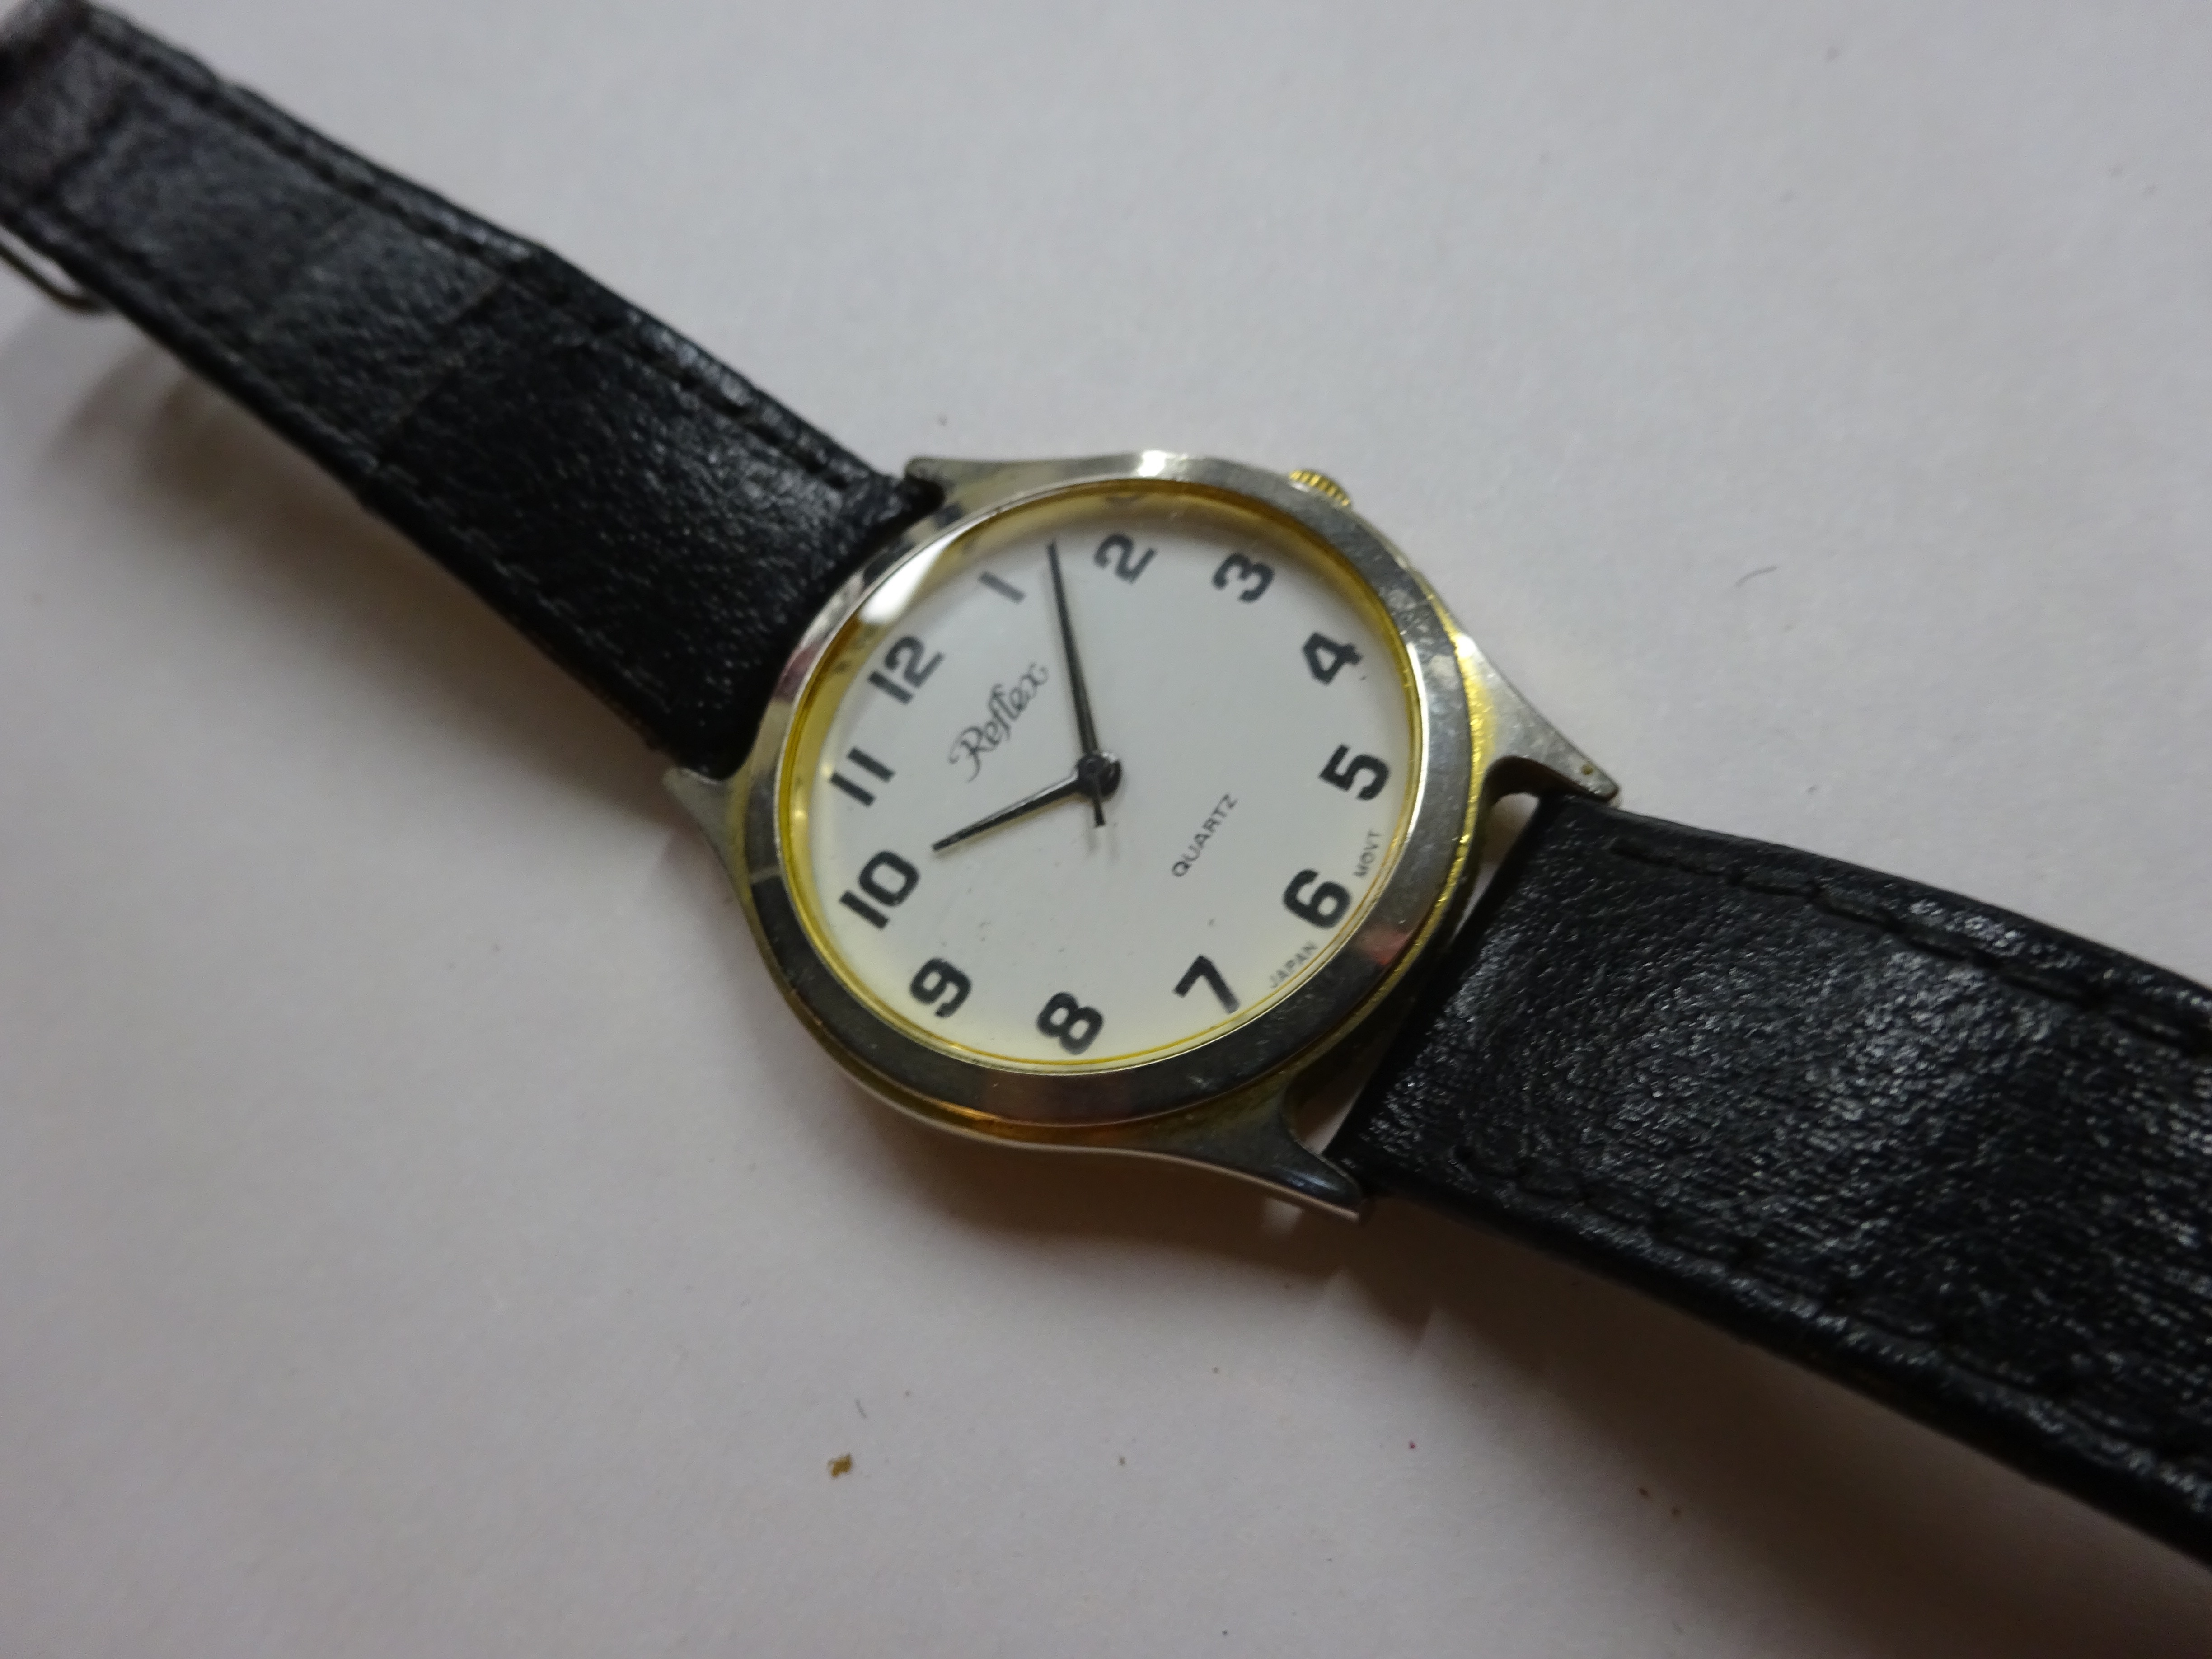 Reflex gent's quartz wristwatch with white dial, black numerals, japan movement, on leather strap - Image 2 of 4